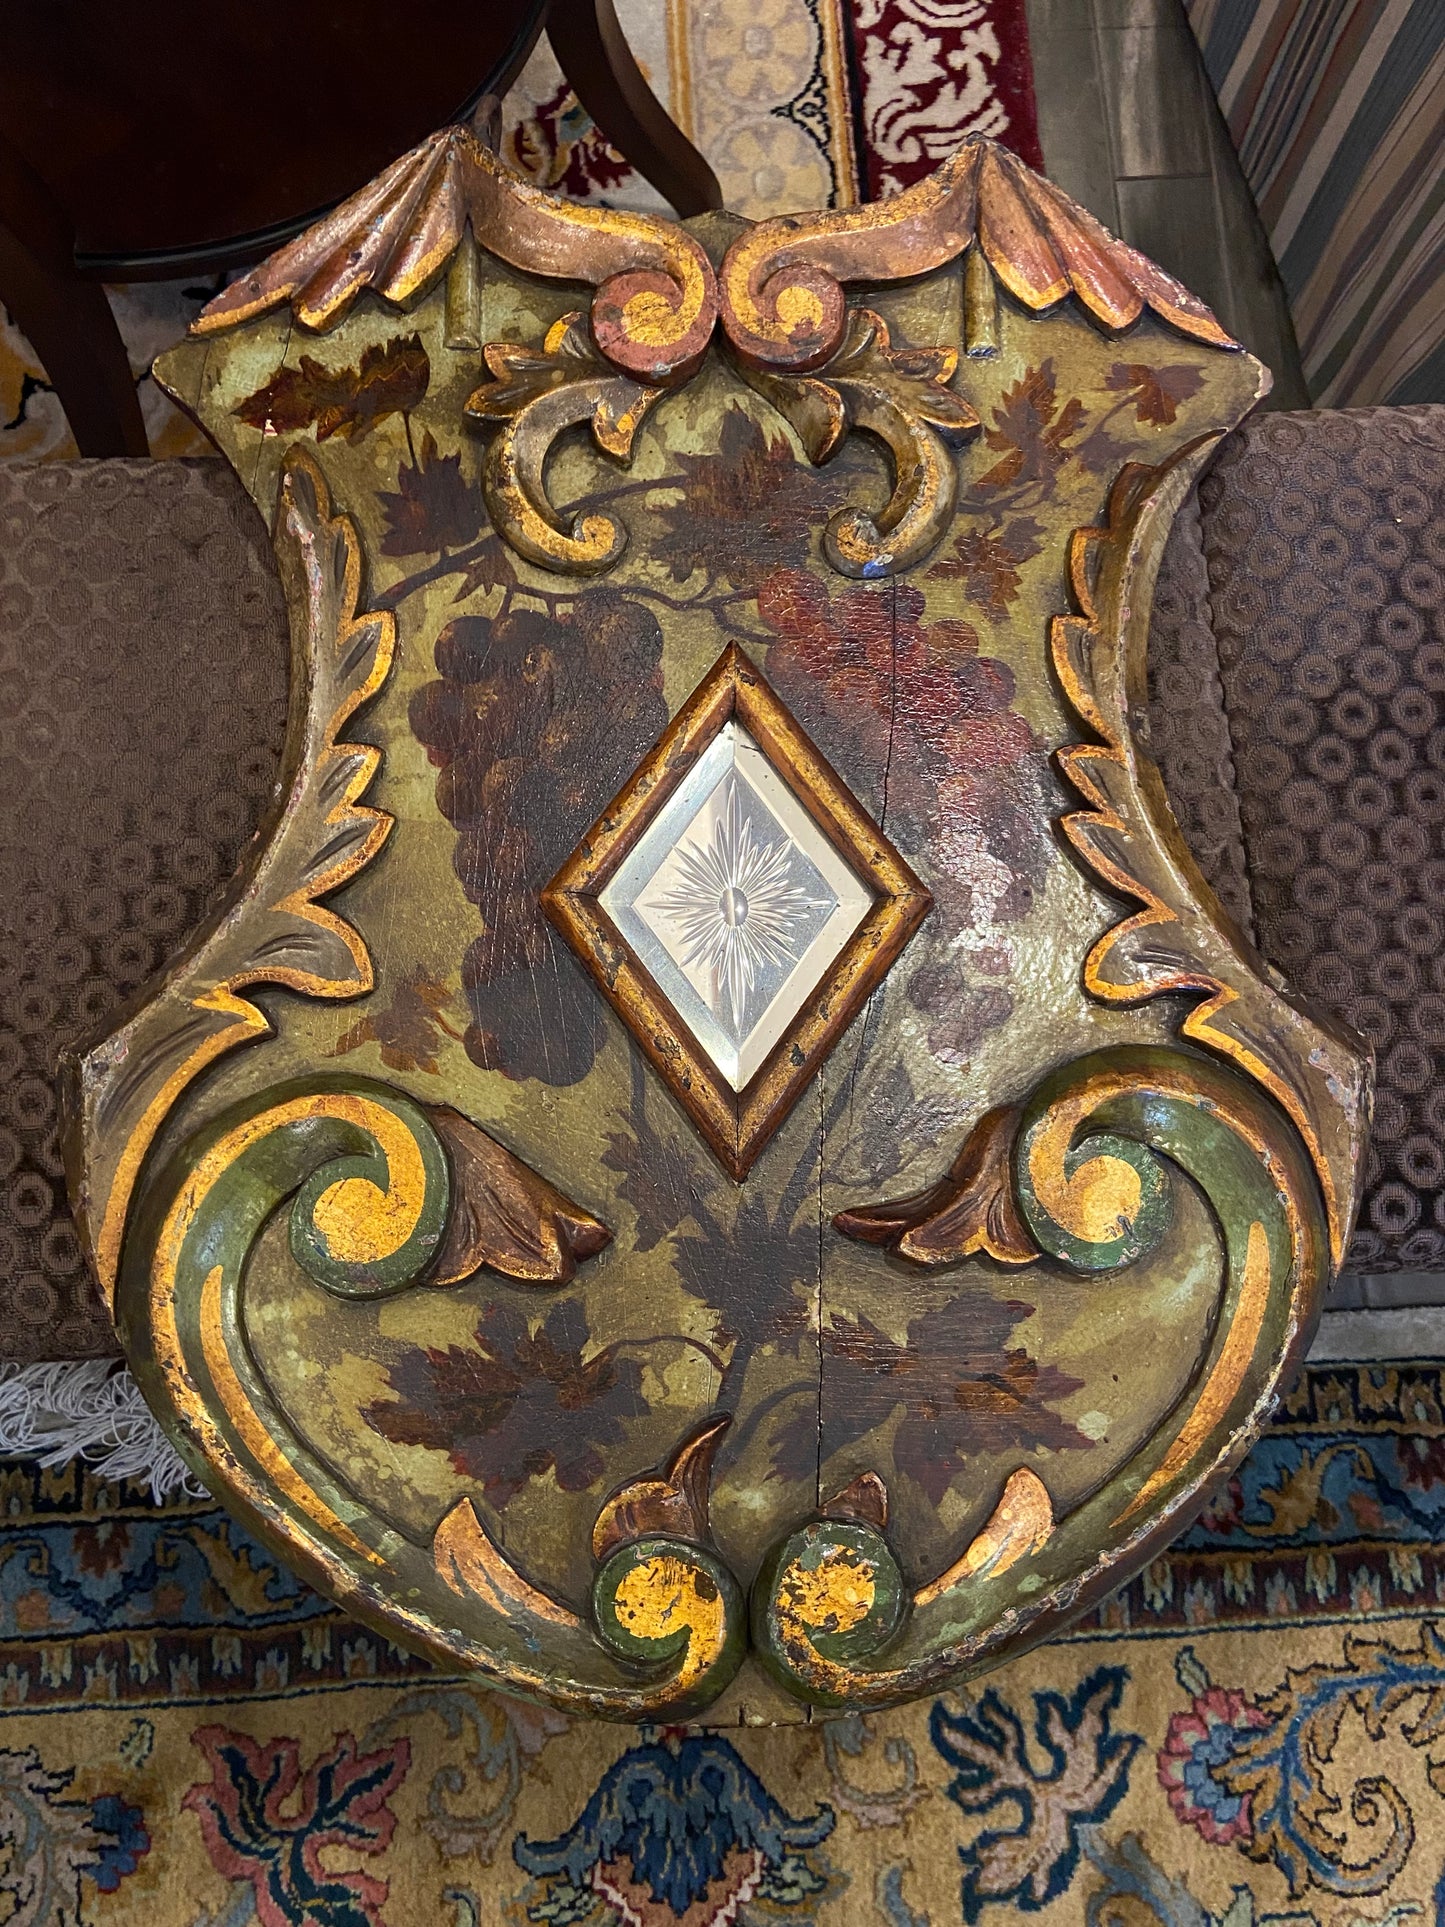 Antique Carousel Panel (25256)